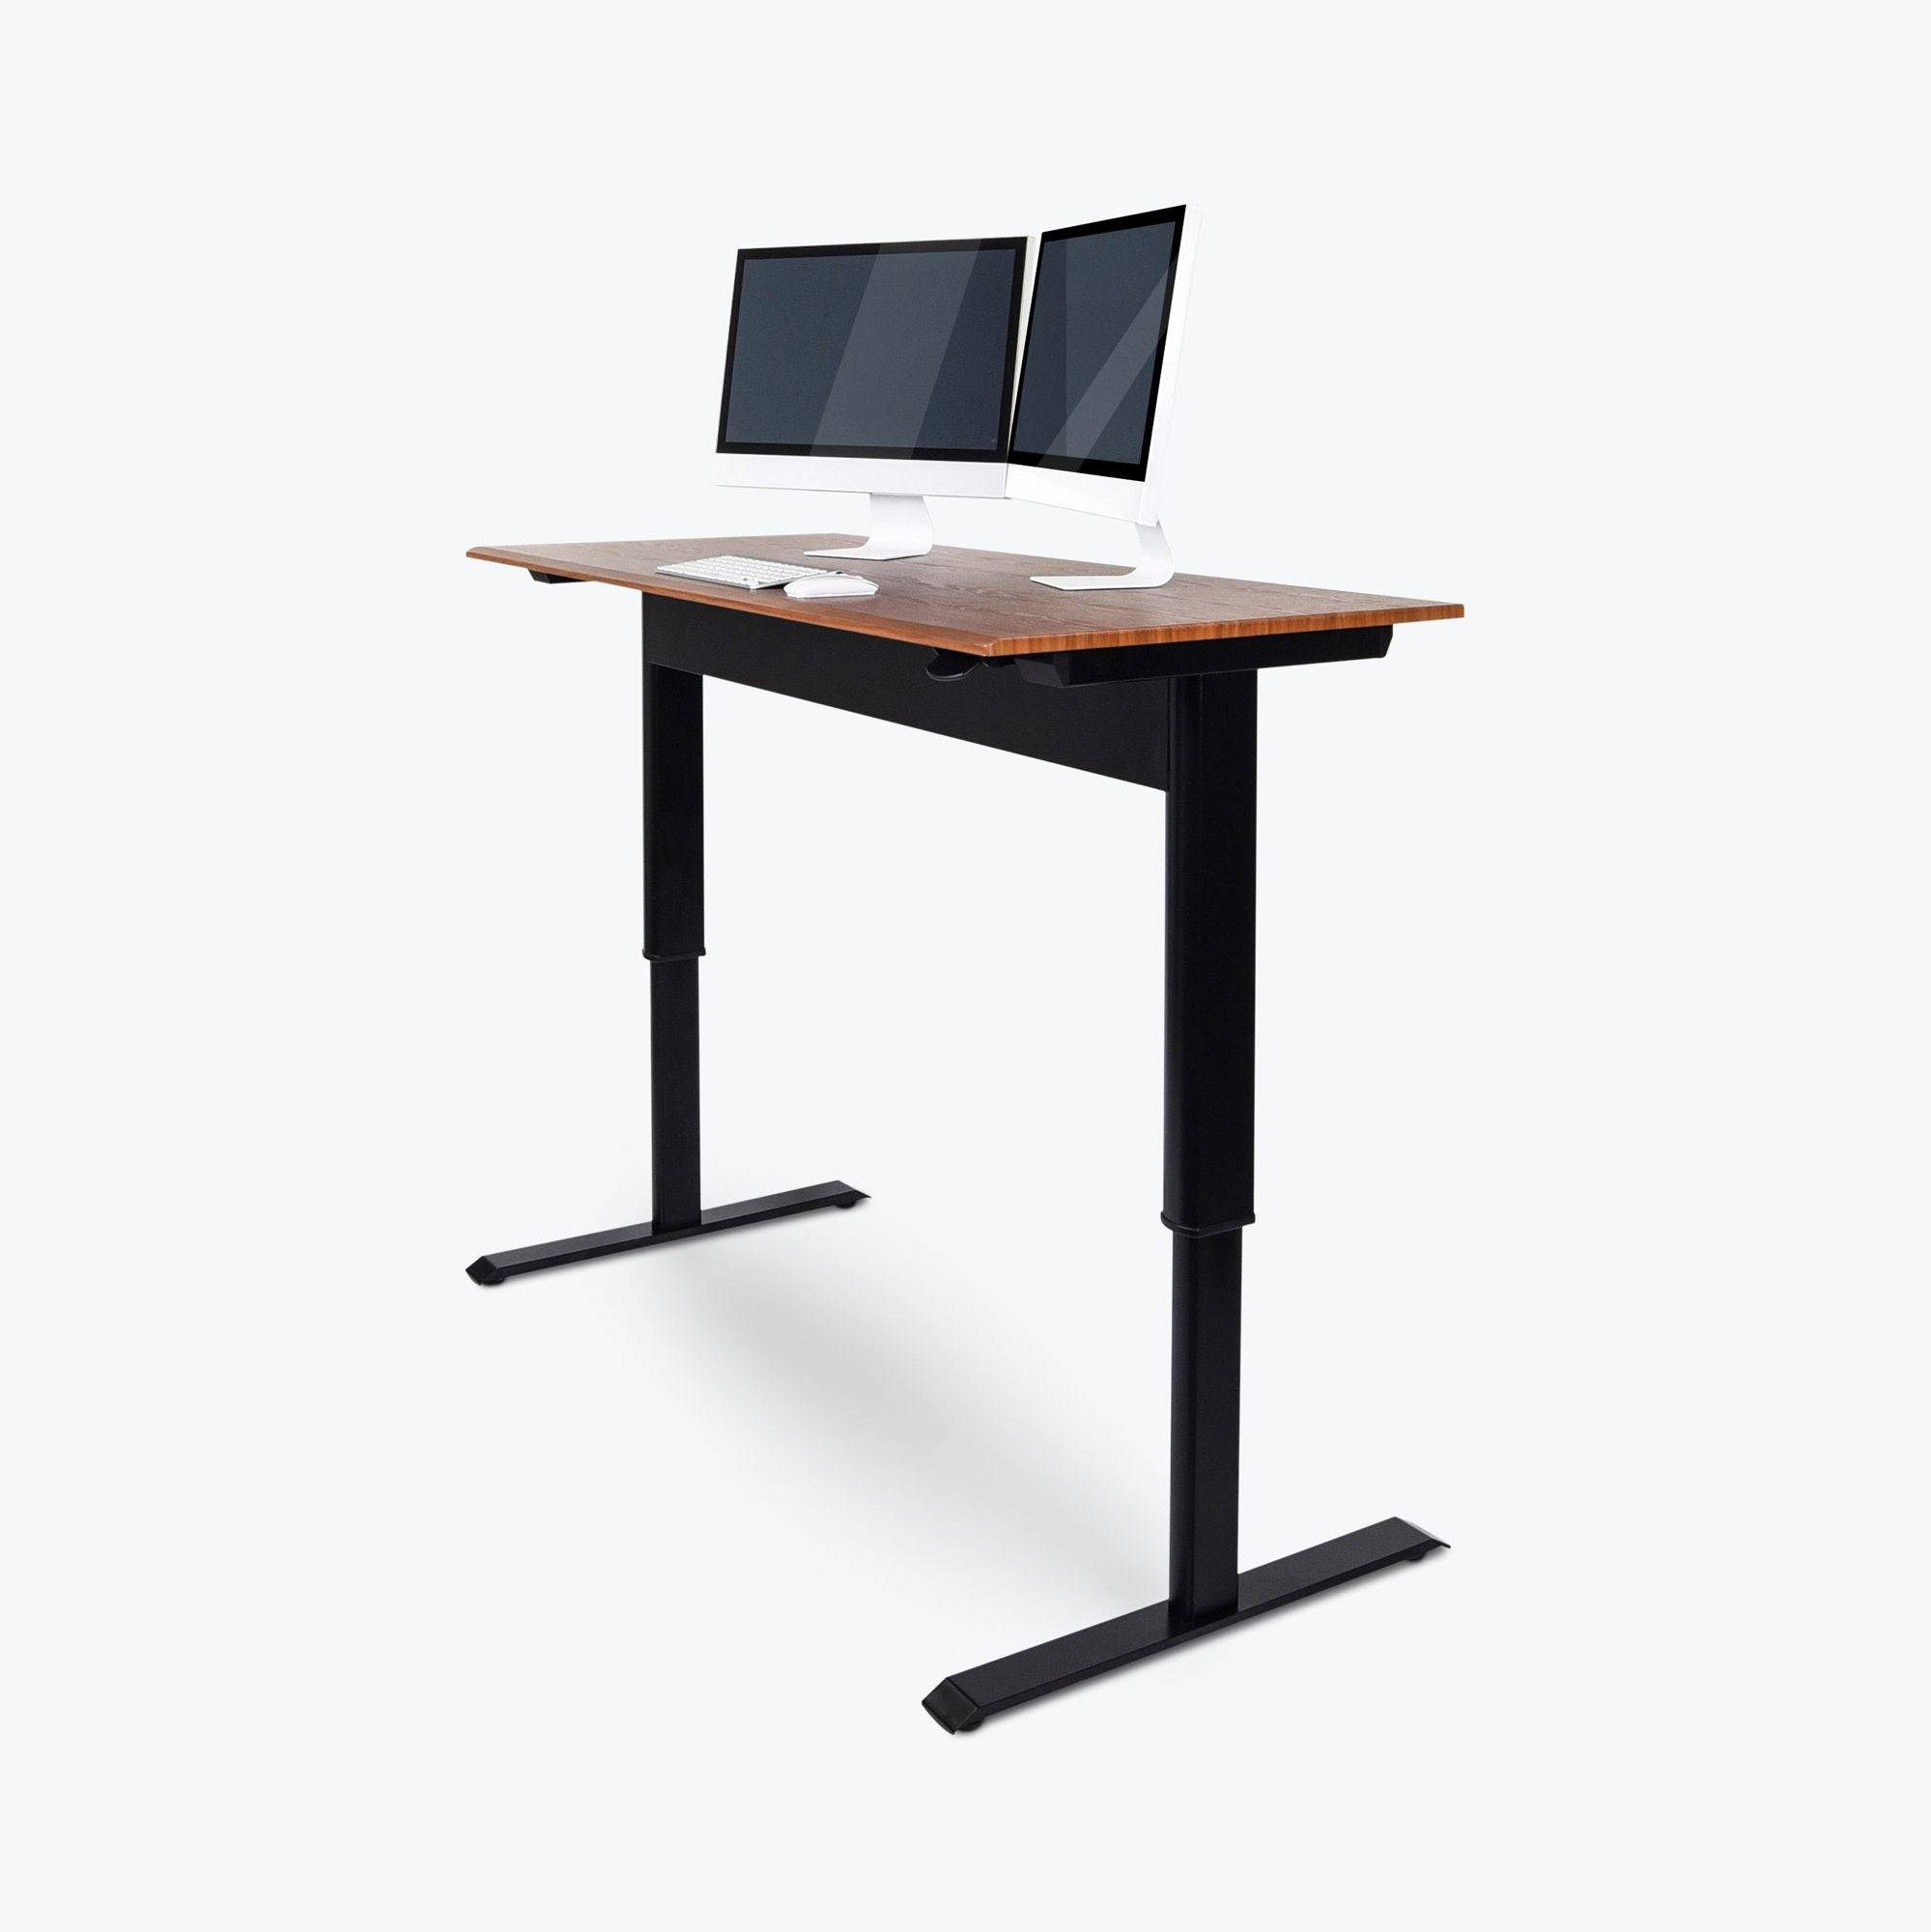 Luxor 48" Pneumatic Adjustable Height Standing Desk 48"W x 29.5"D x 27.5" to 44.5"H (Black/Teak) - SPN48F-BK/TK